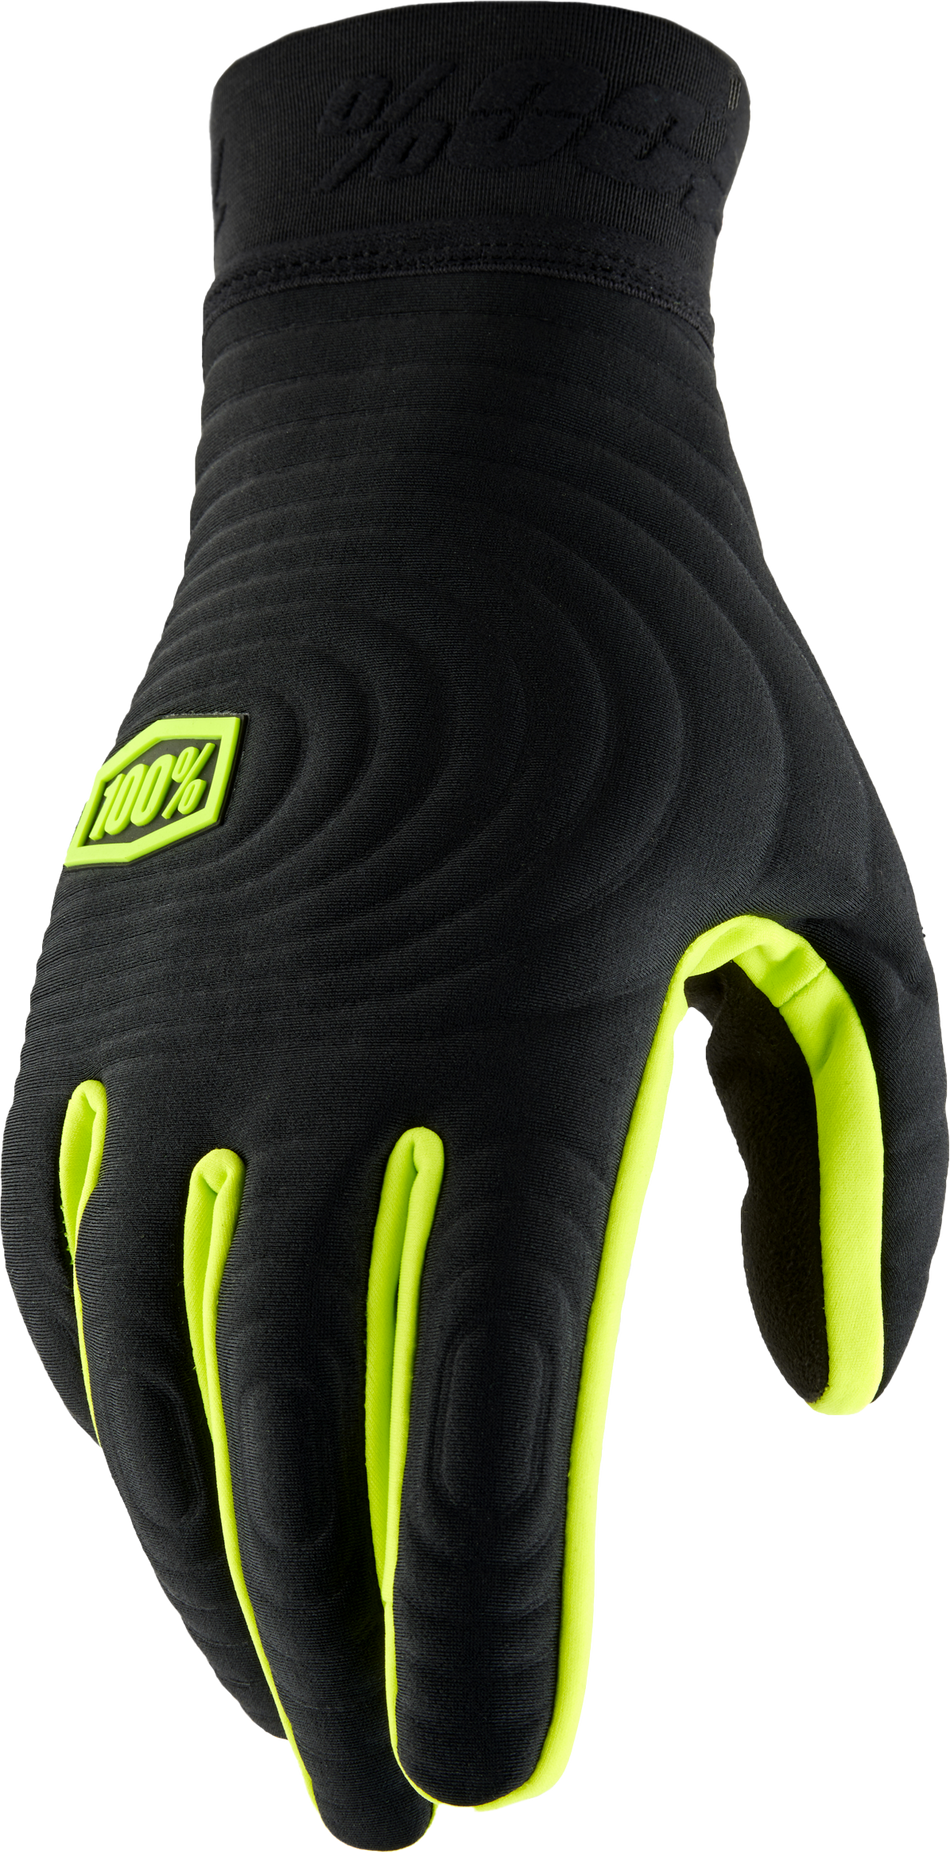 100% Brisker Xtreme Gloves Black/Fluo Yellow Md 10030-00002